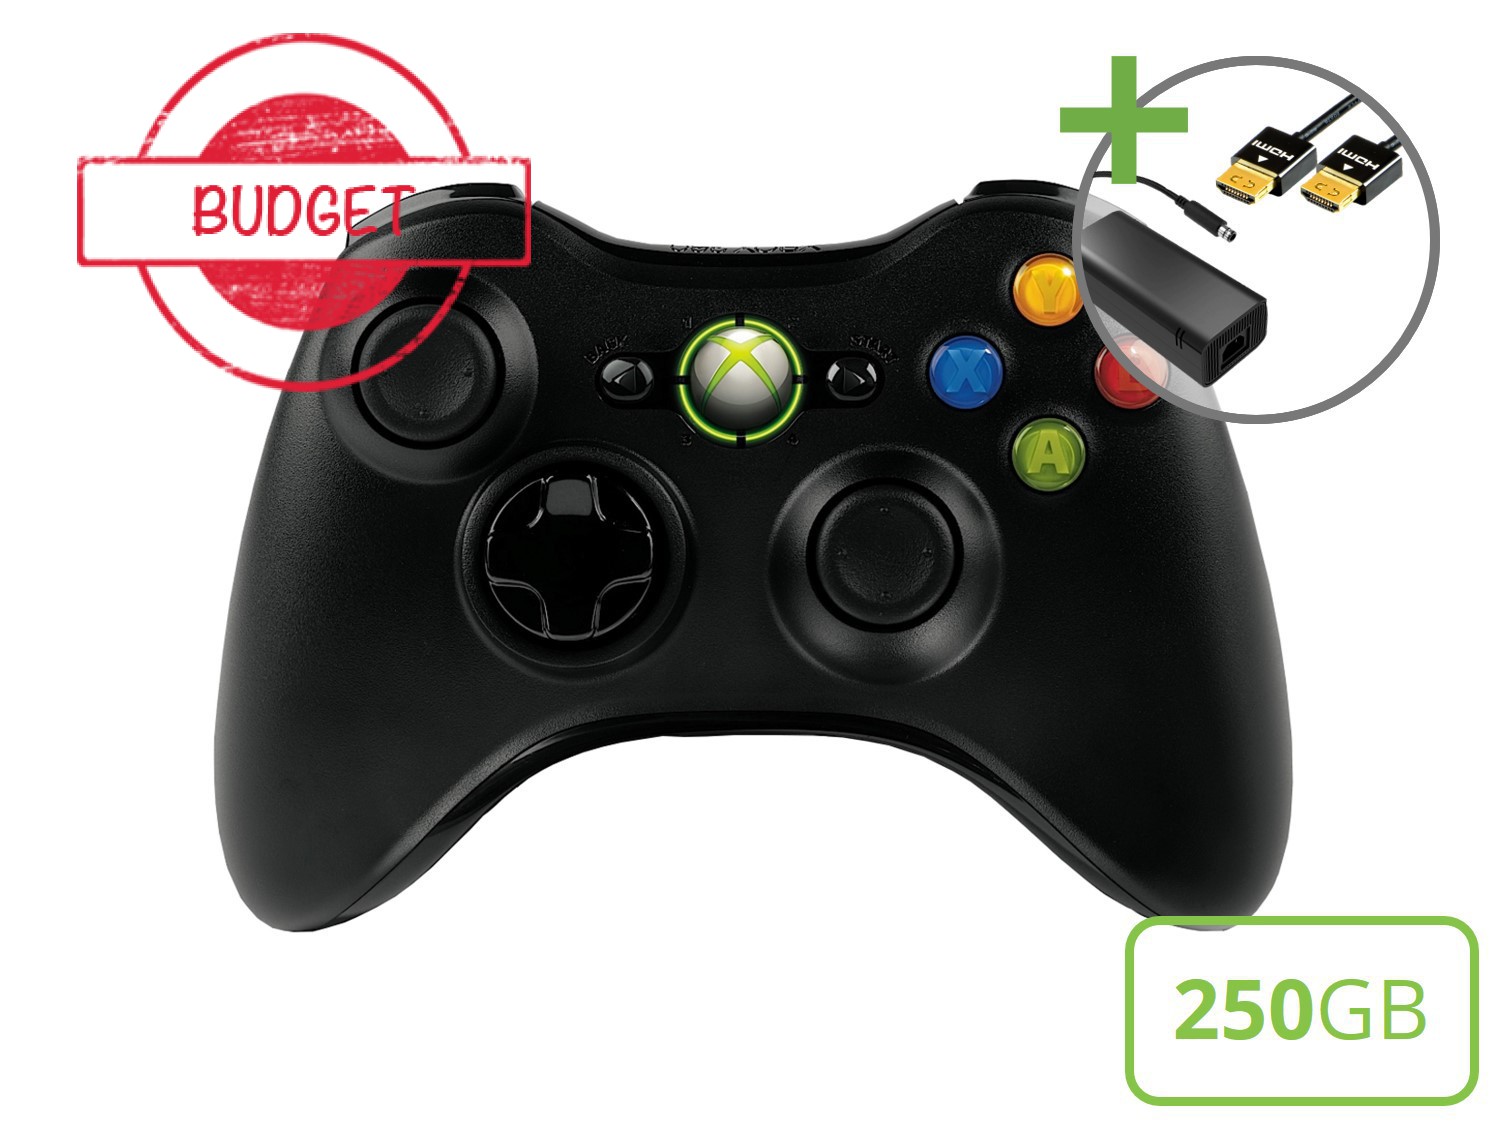 Microsoft Xbox 360 New Slim Starter Pack - 250GB Call of Duty Edition - Budget - Xbox 360 Hardware - 4